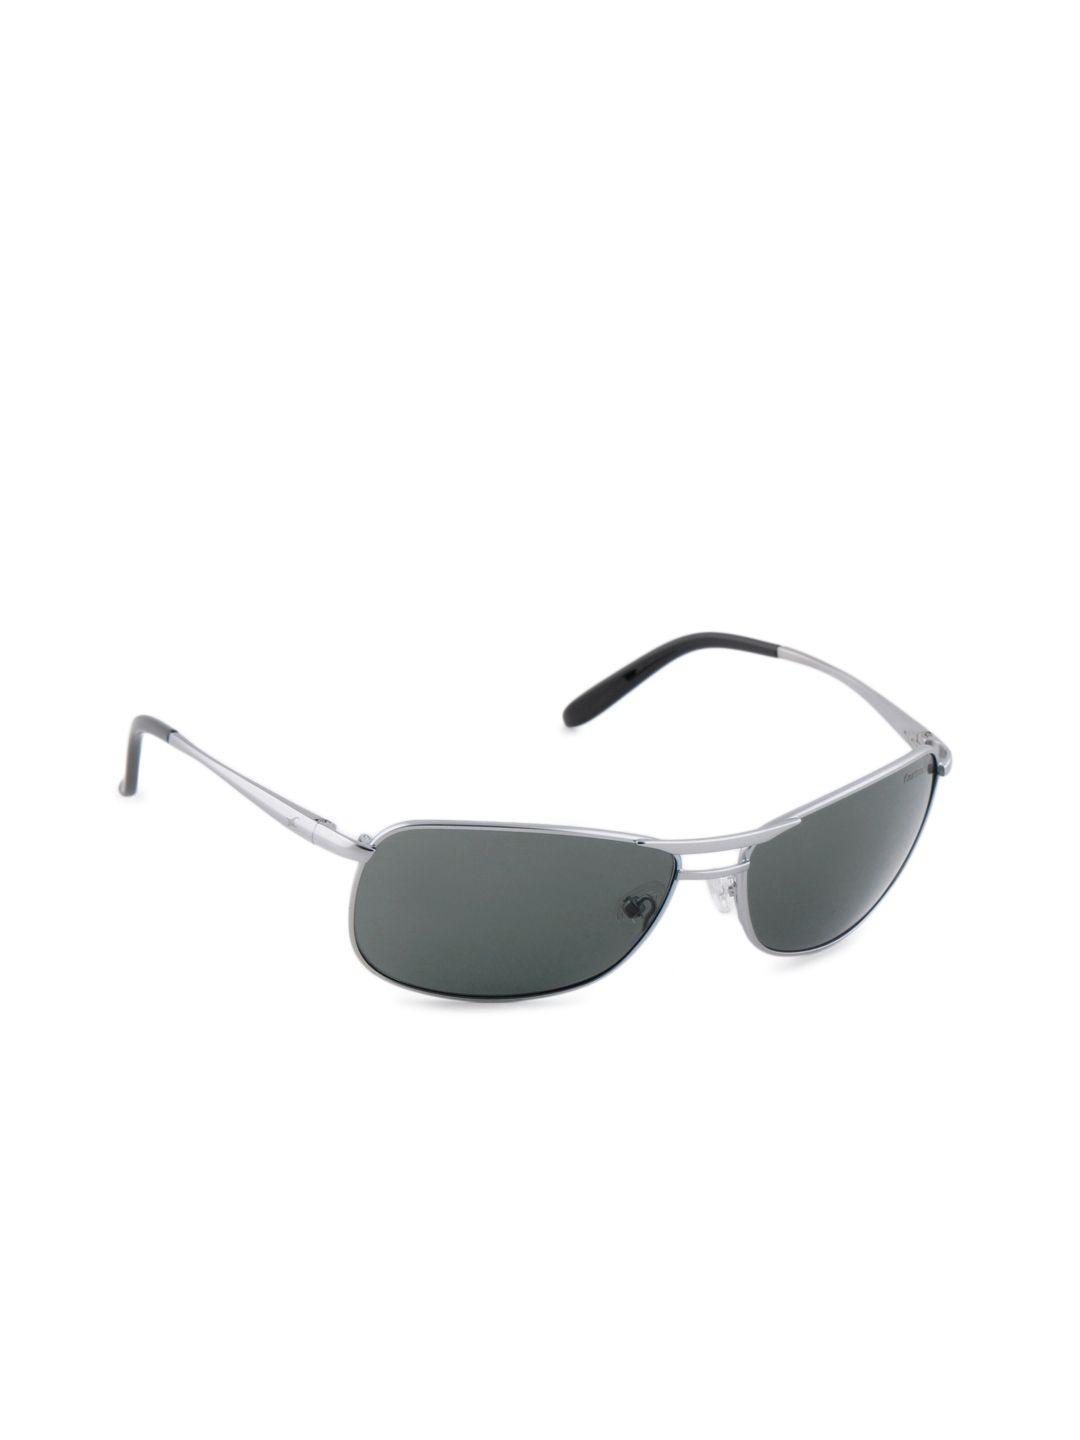 fastrack-men-sunglasses